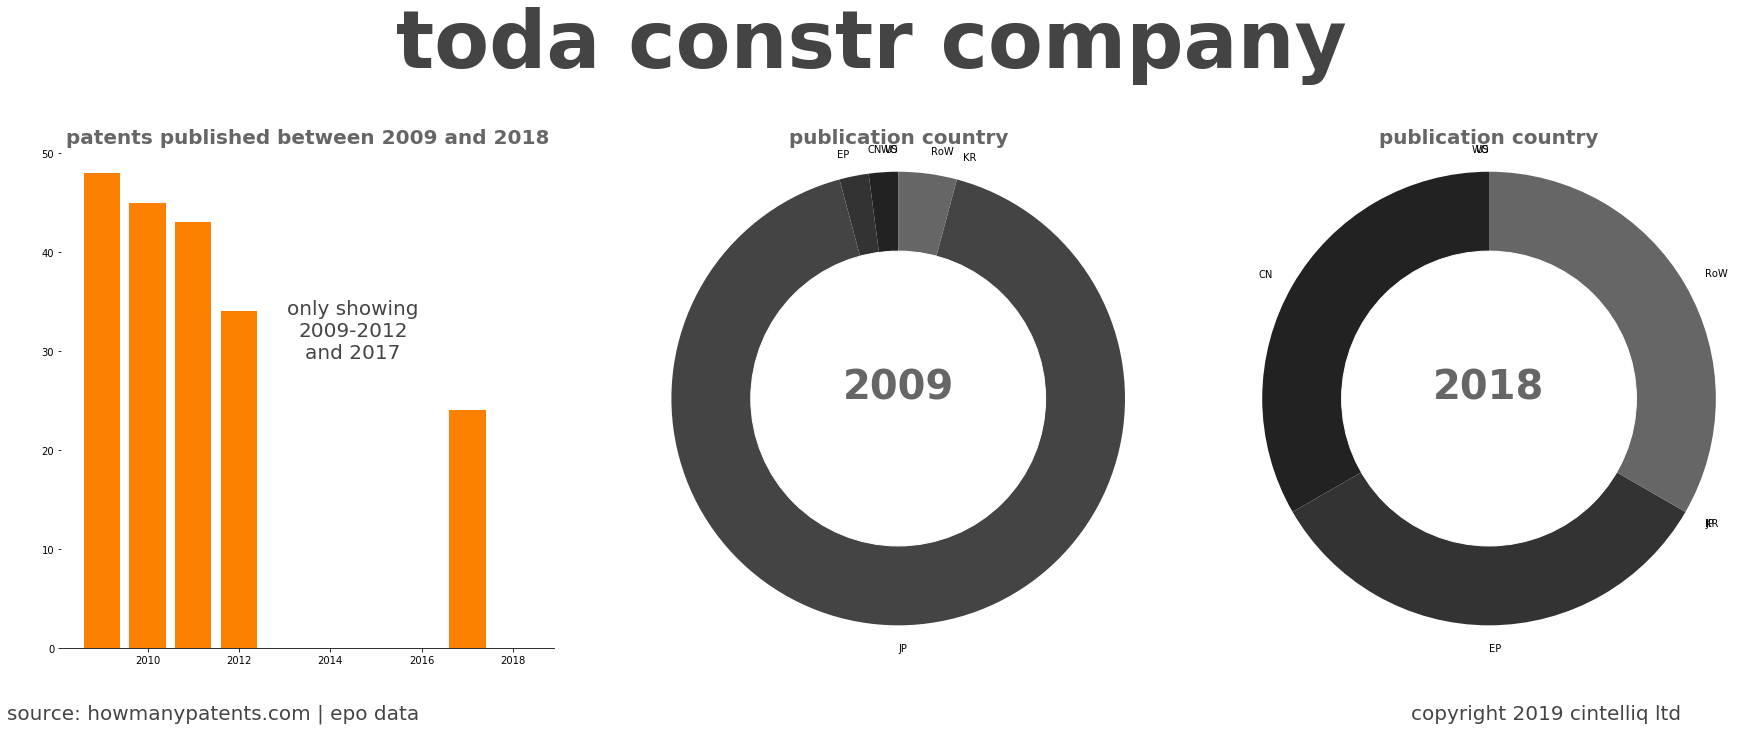 summary of patents for Toda Constr Company